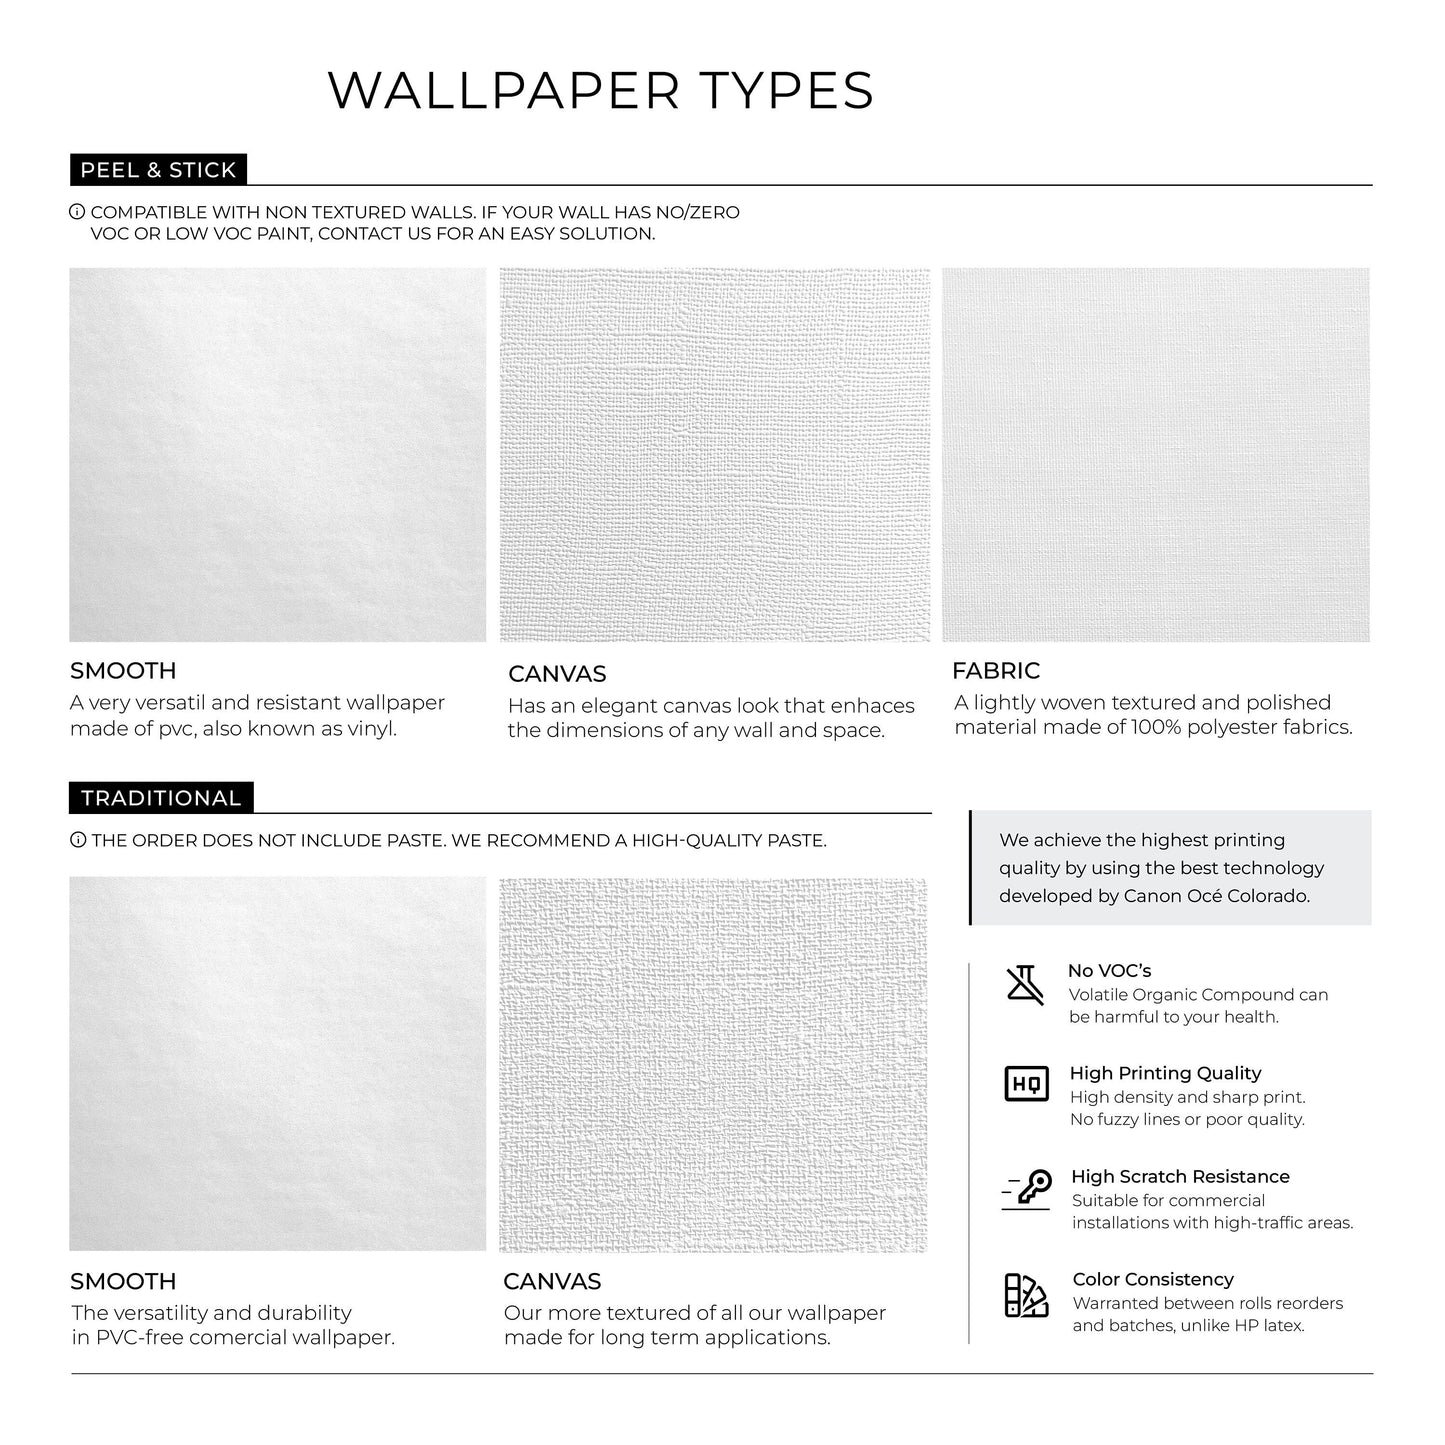 Removable Wallpaper Scandinavian Wallpaper Temporary Wallpaper Vintage Wallpaper Peel and Stick Wallpaper Wall Paper - A718